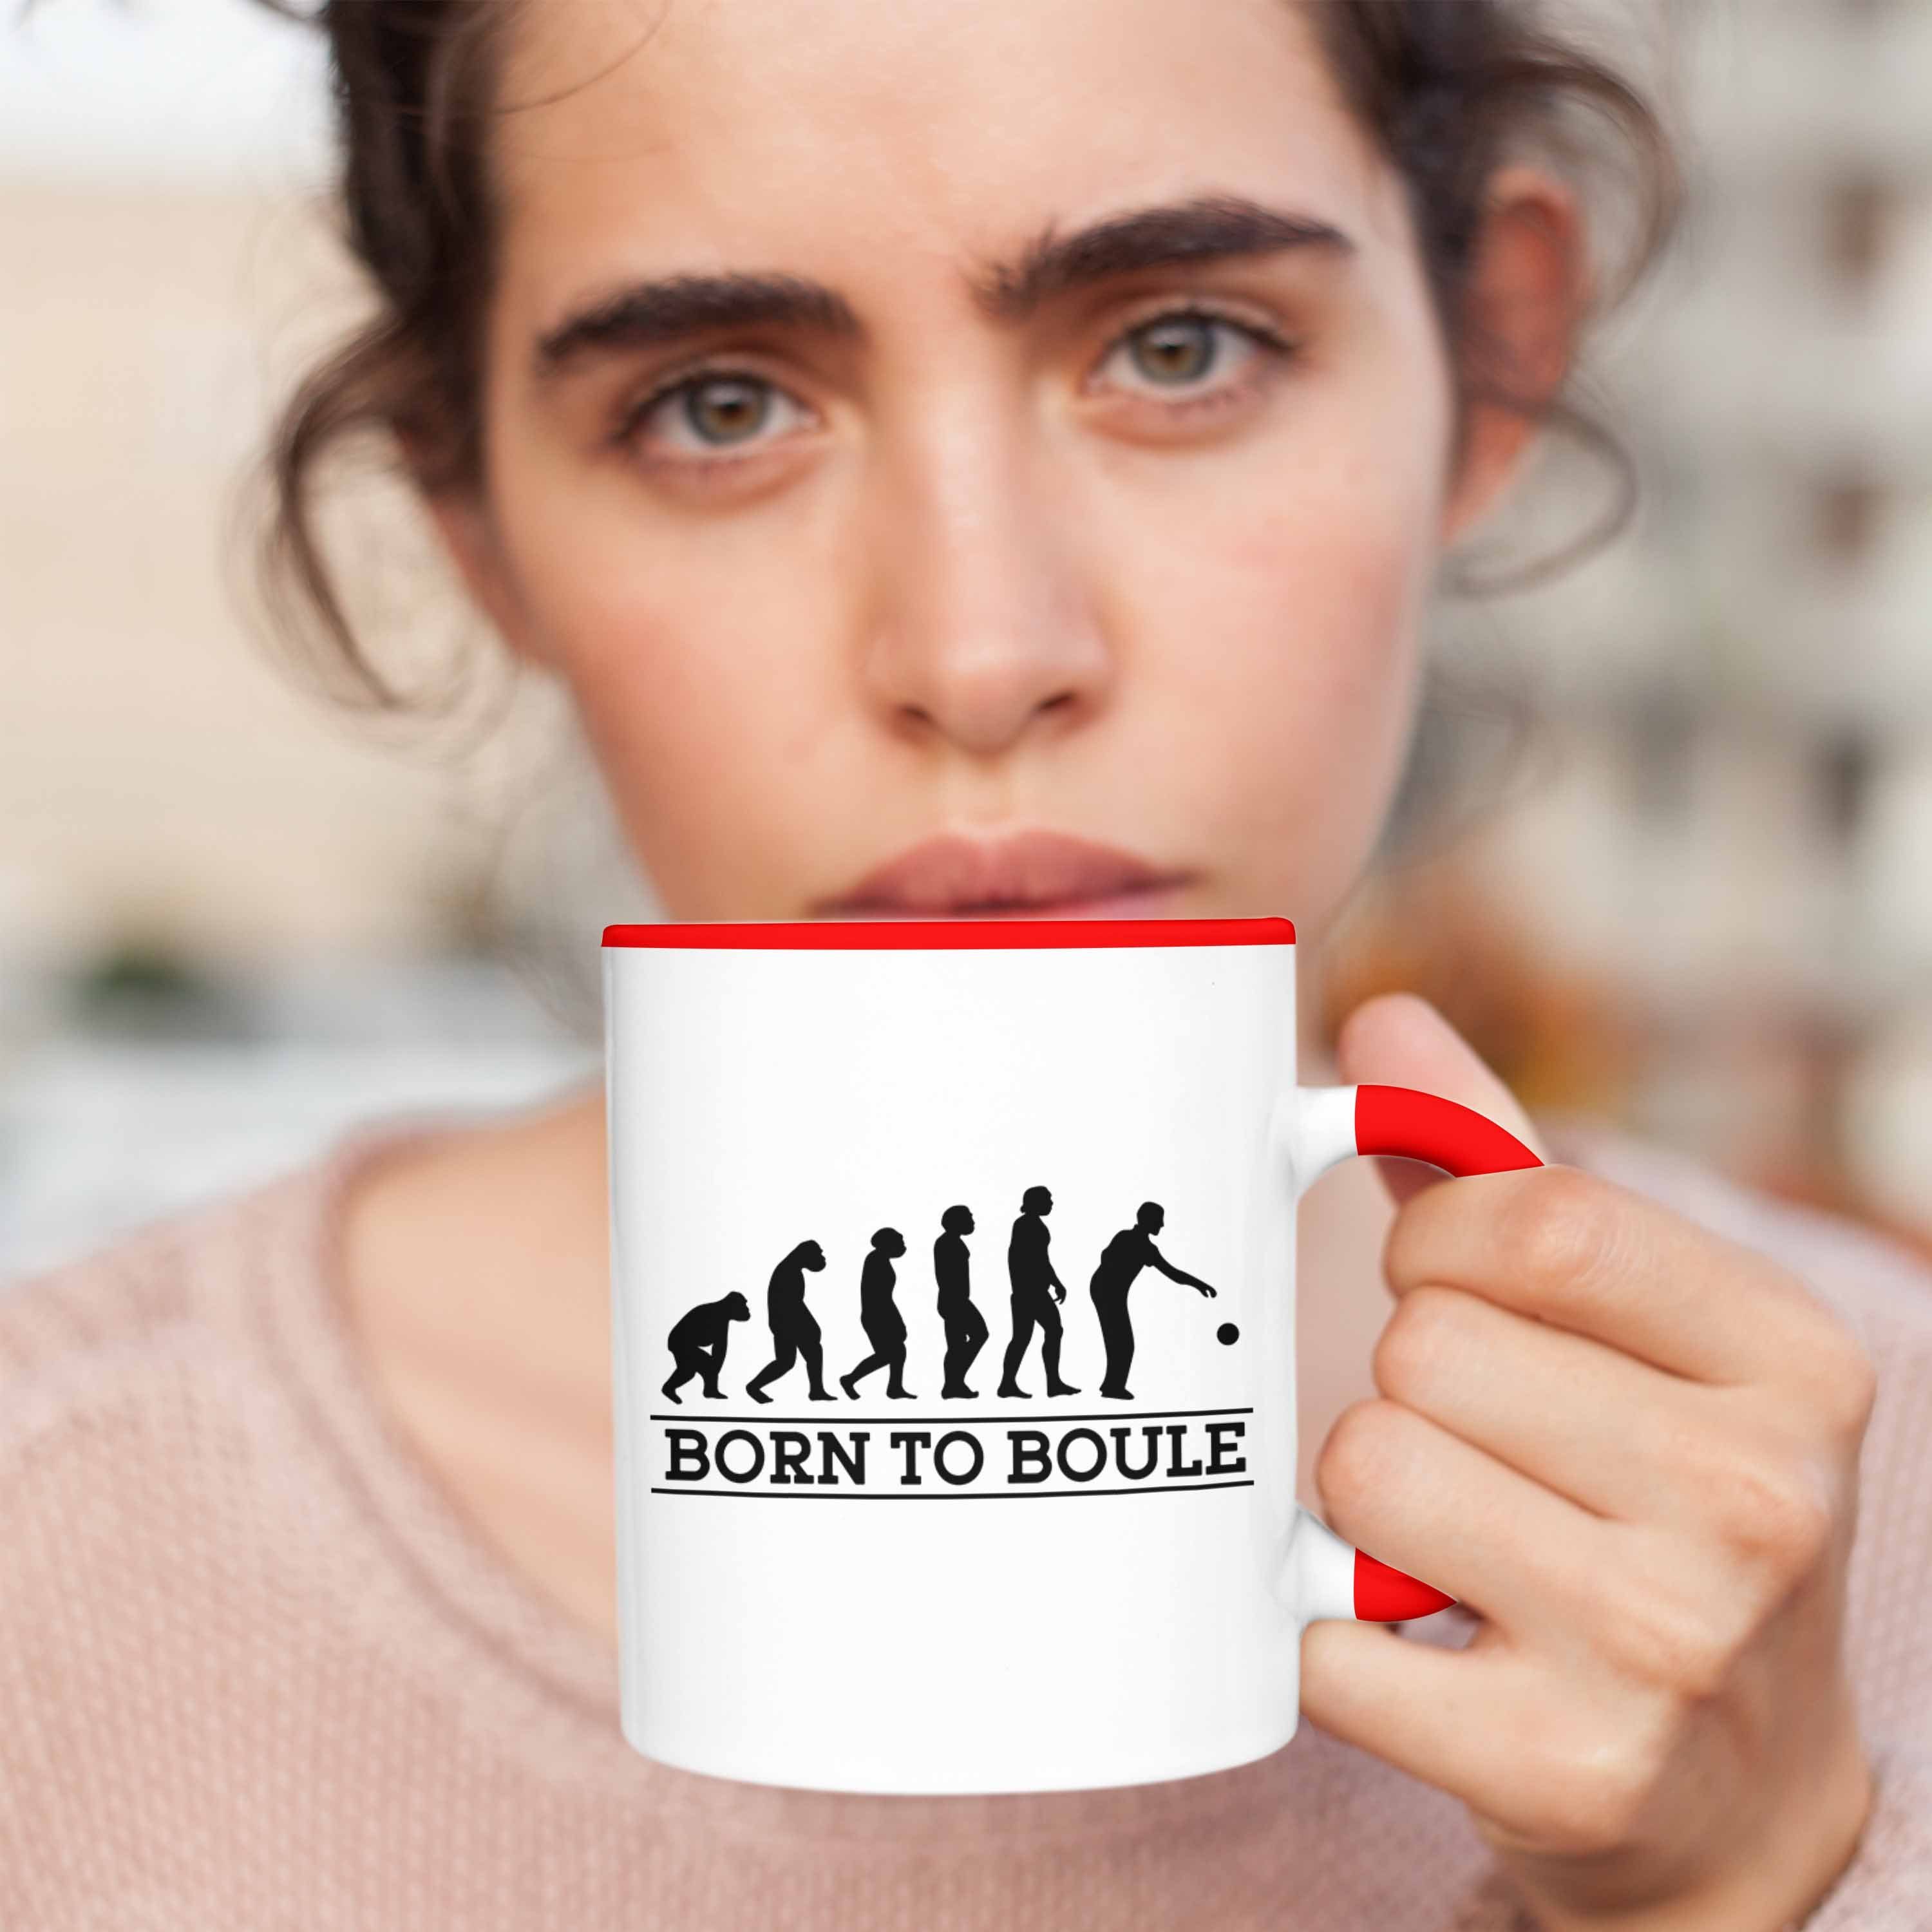 Trendation Tasse Boule Boule Rot Geschenk Geschenkidee To Boule-Spieler Born Tasse Spruch